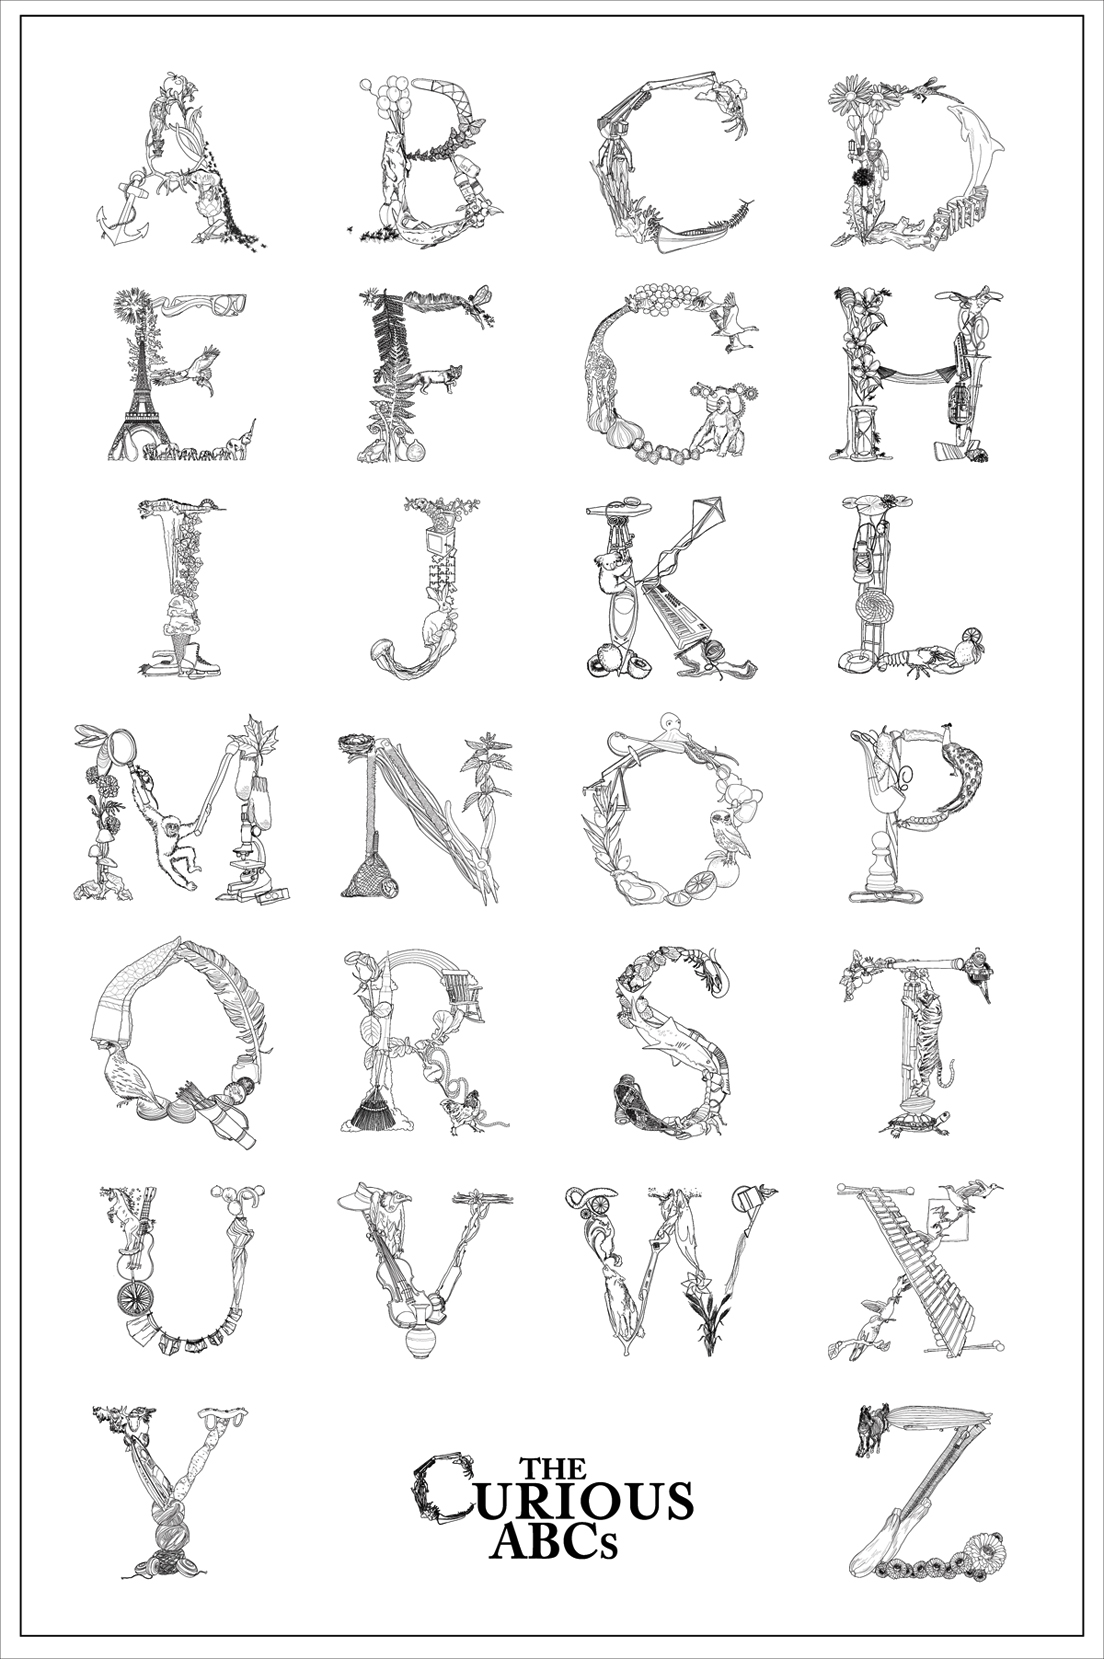 The complete alphabet.